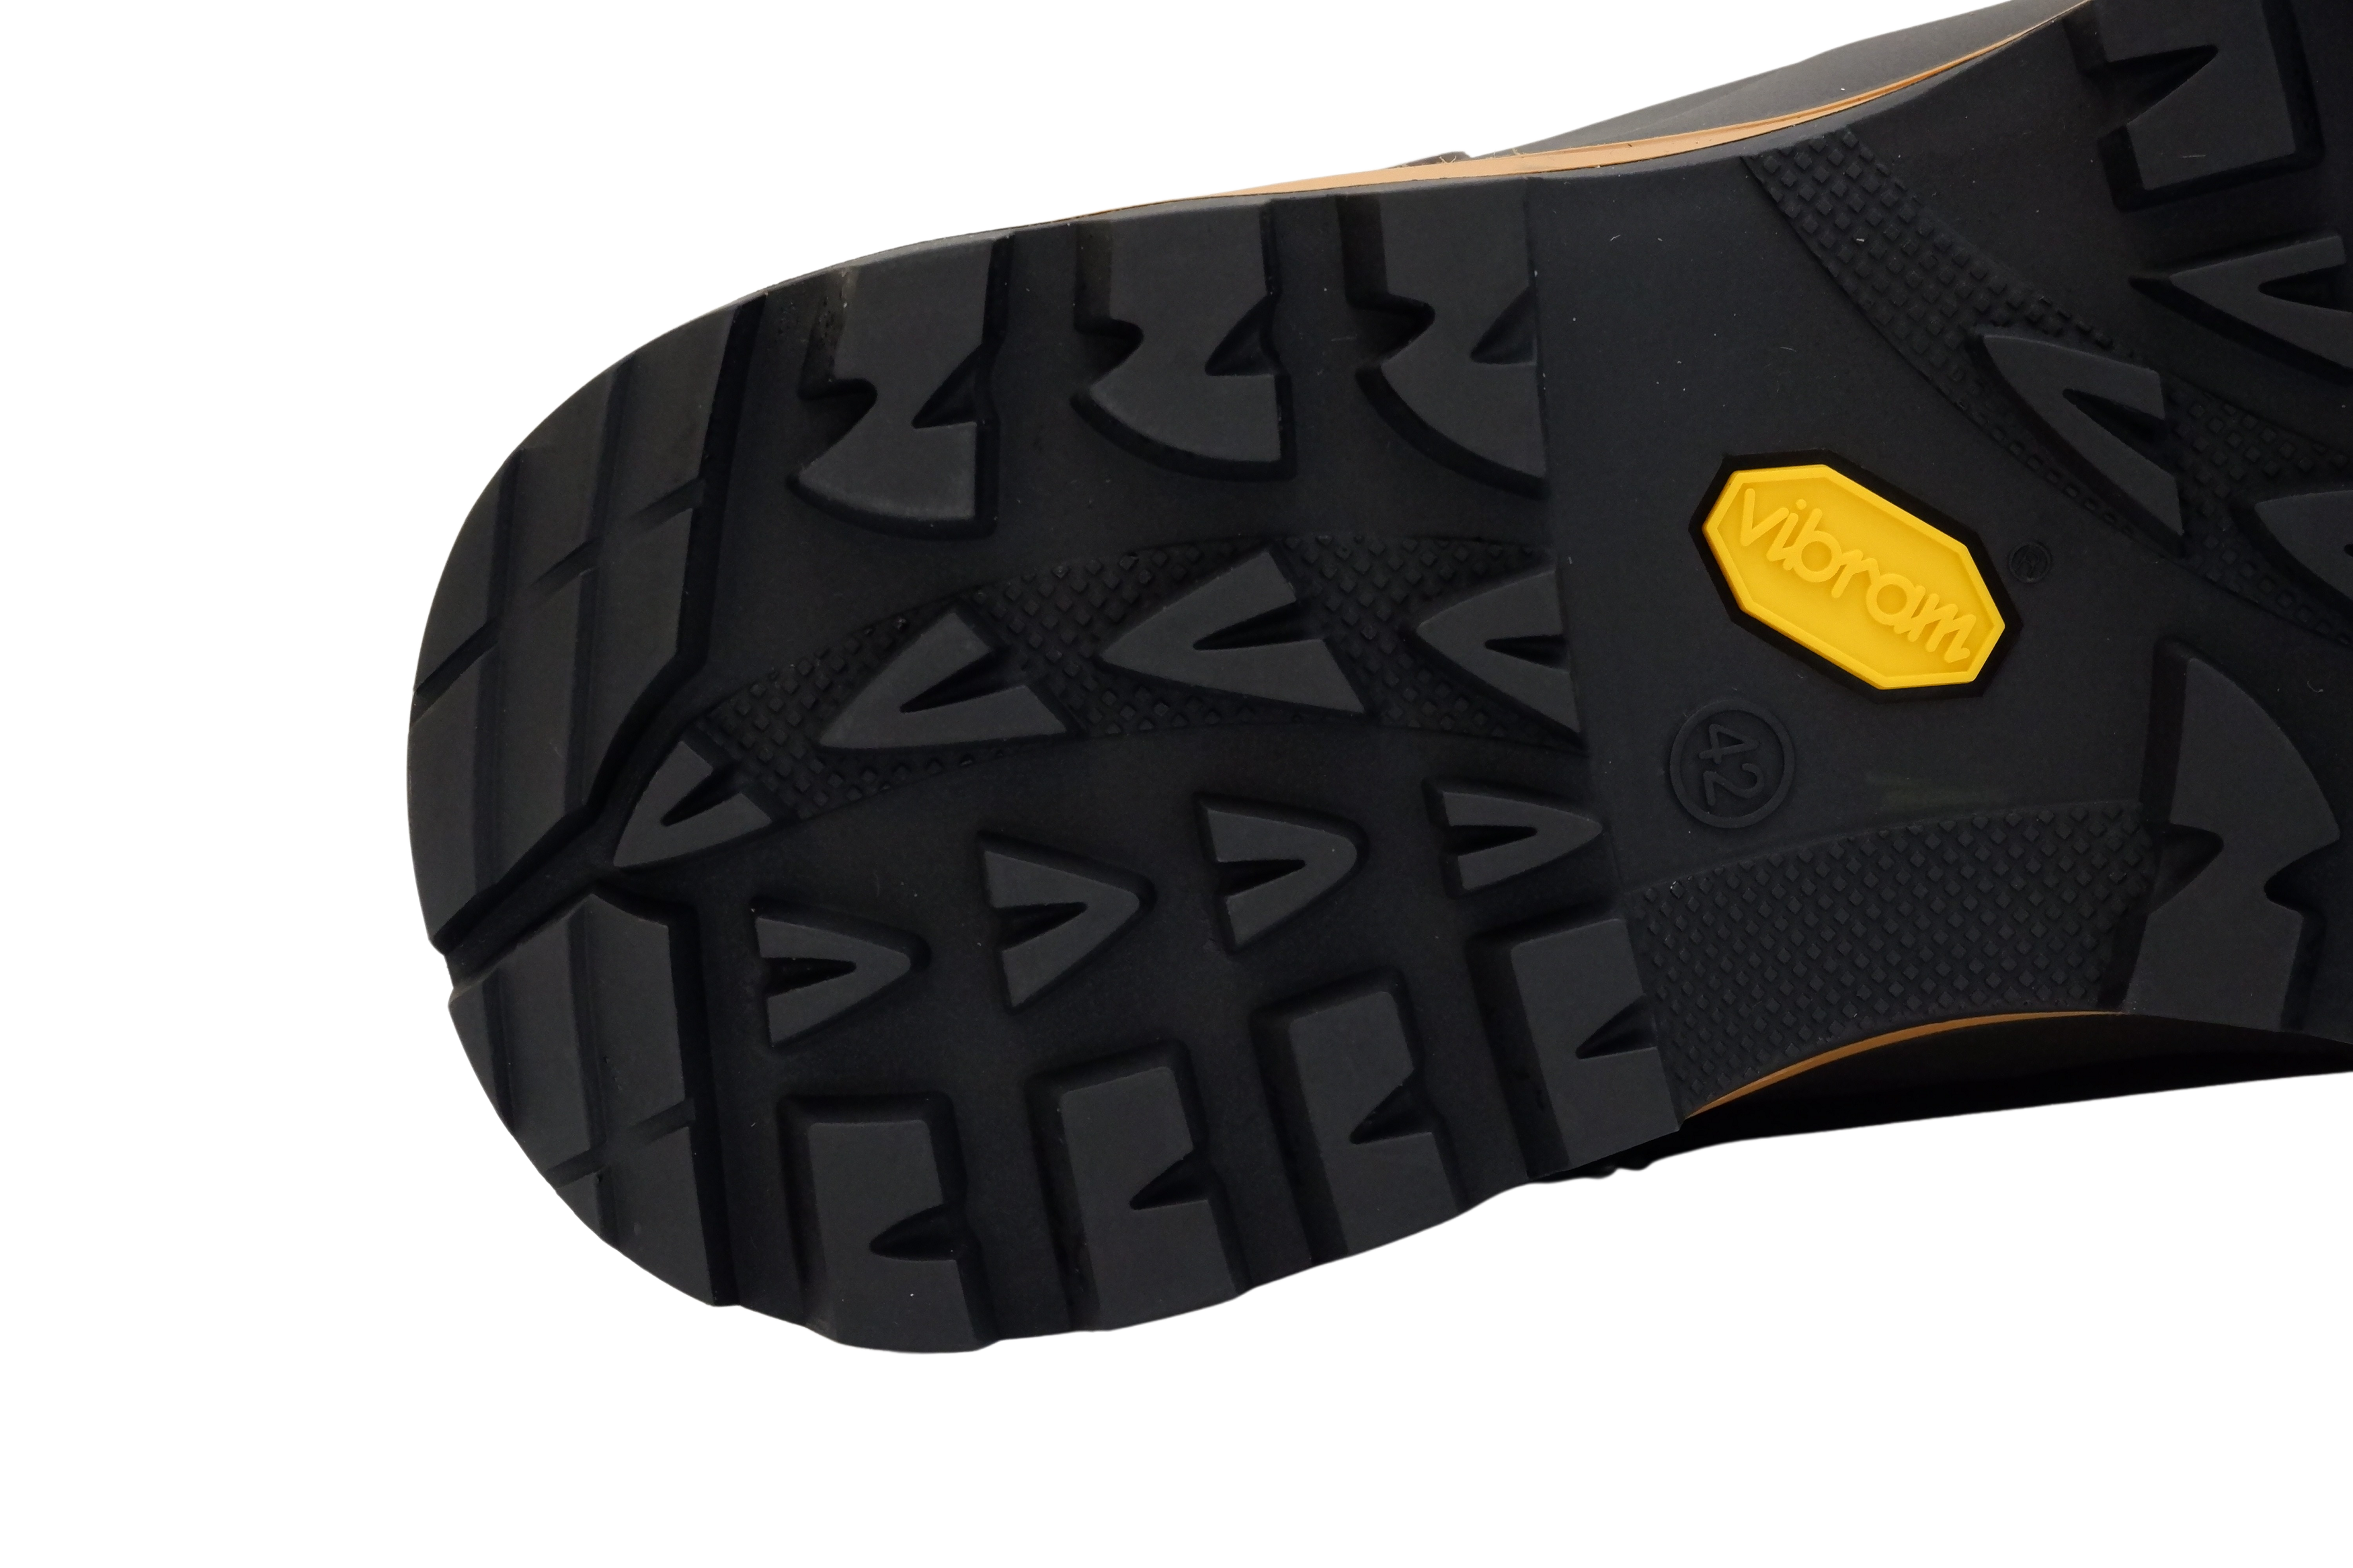 Grisport Men's Hiker Boot Eagle 6" Waterproof with Vibram Sole Sizes 7-14